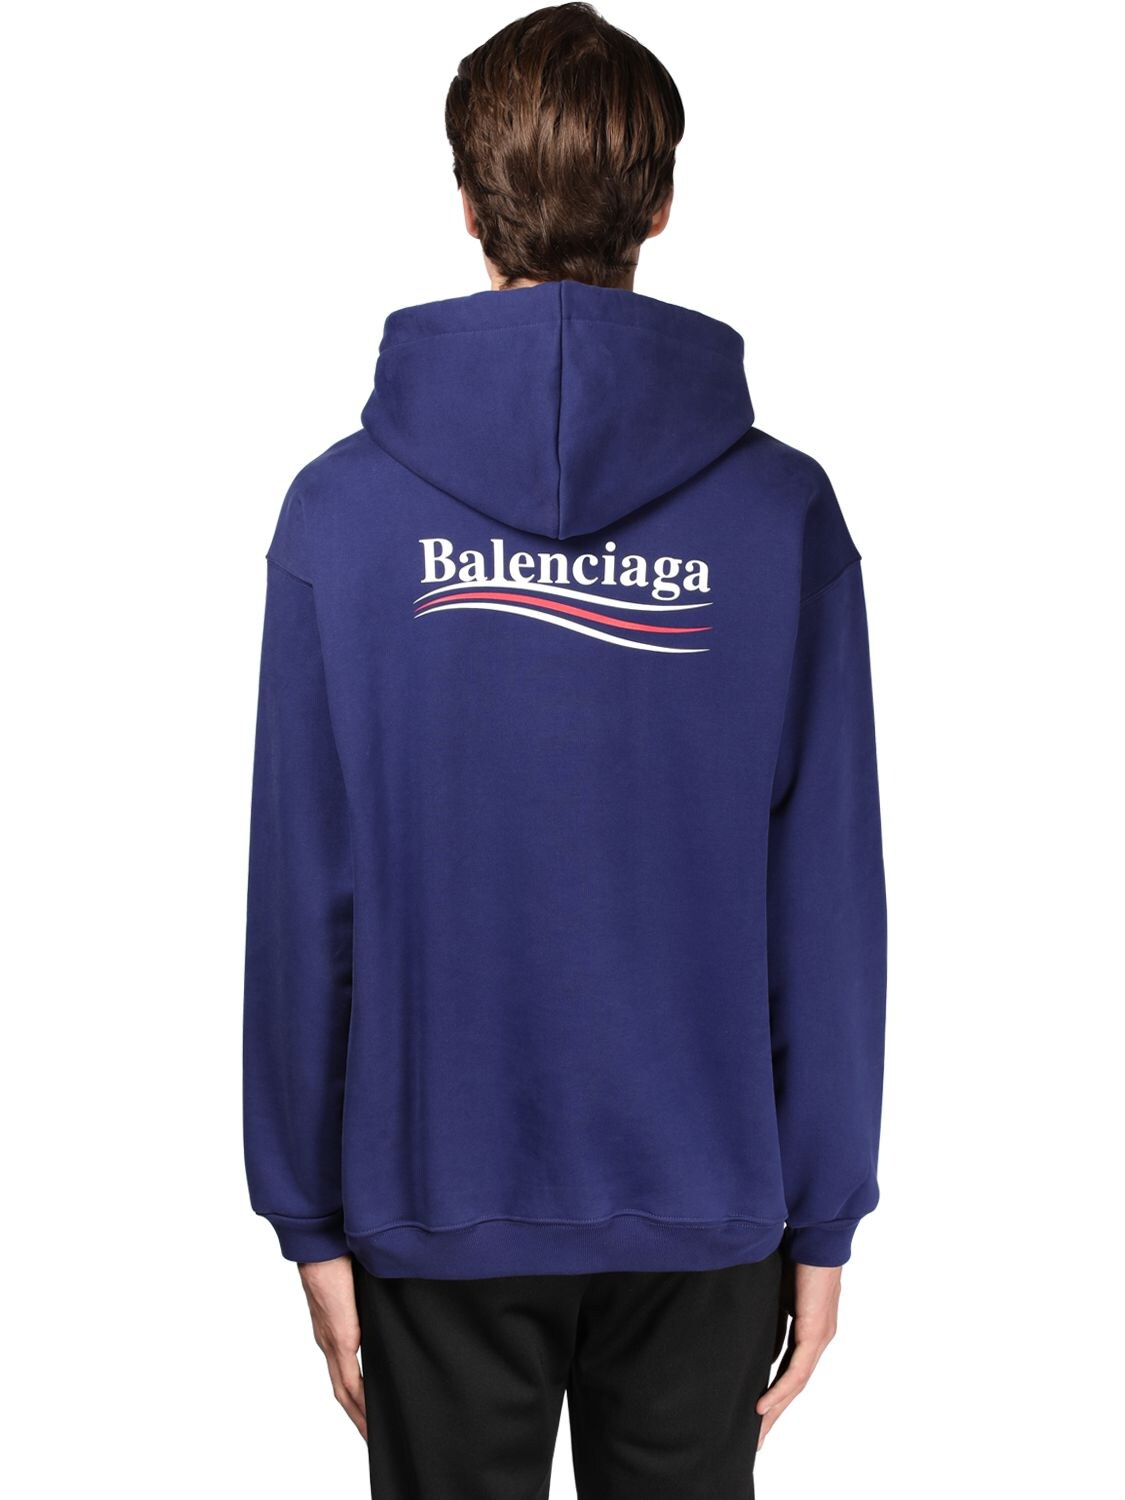 balenciaga inspired hoodie